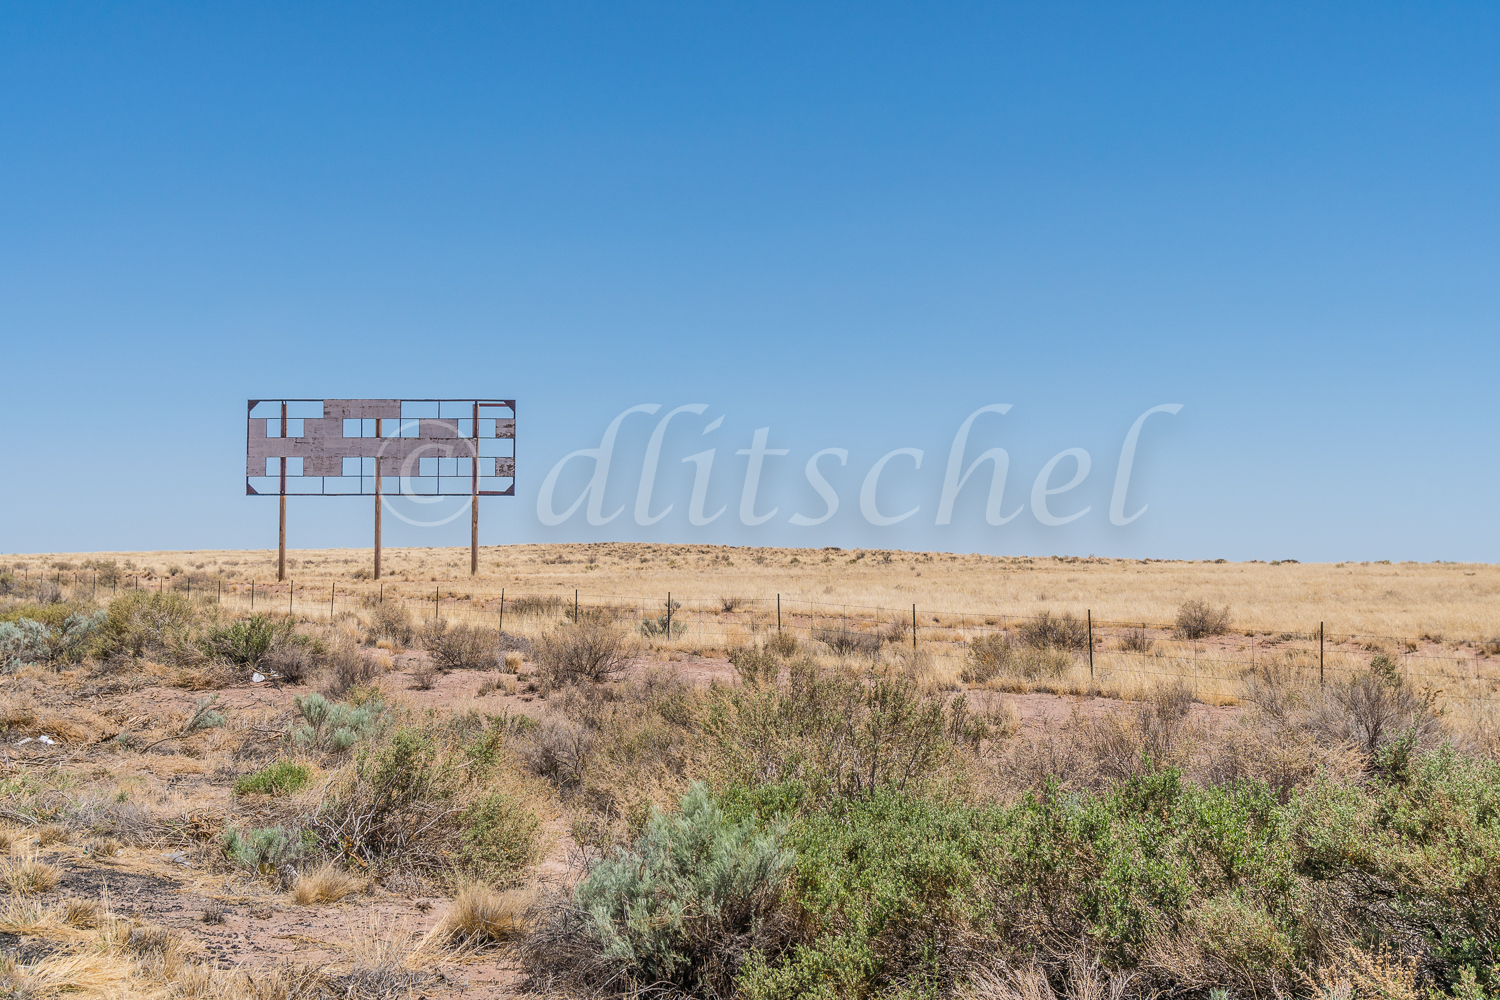 Empty bllboard in empty landscape on US highway 40 near Holbrook, Arizona.